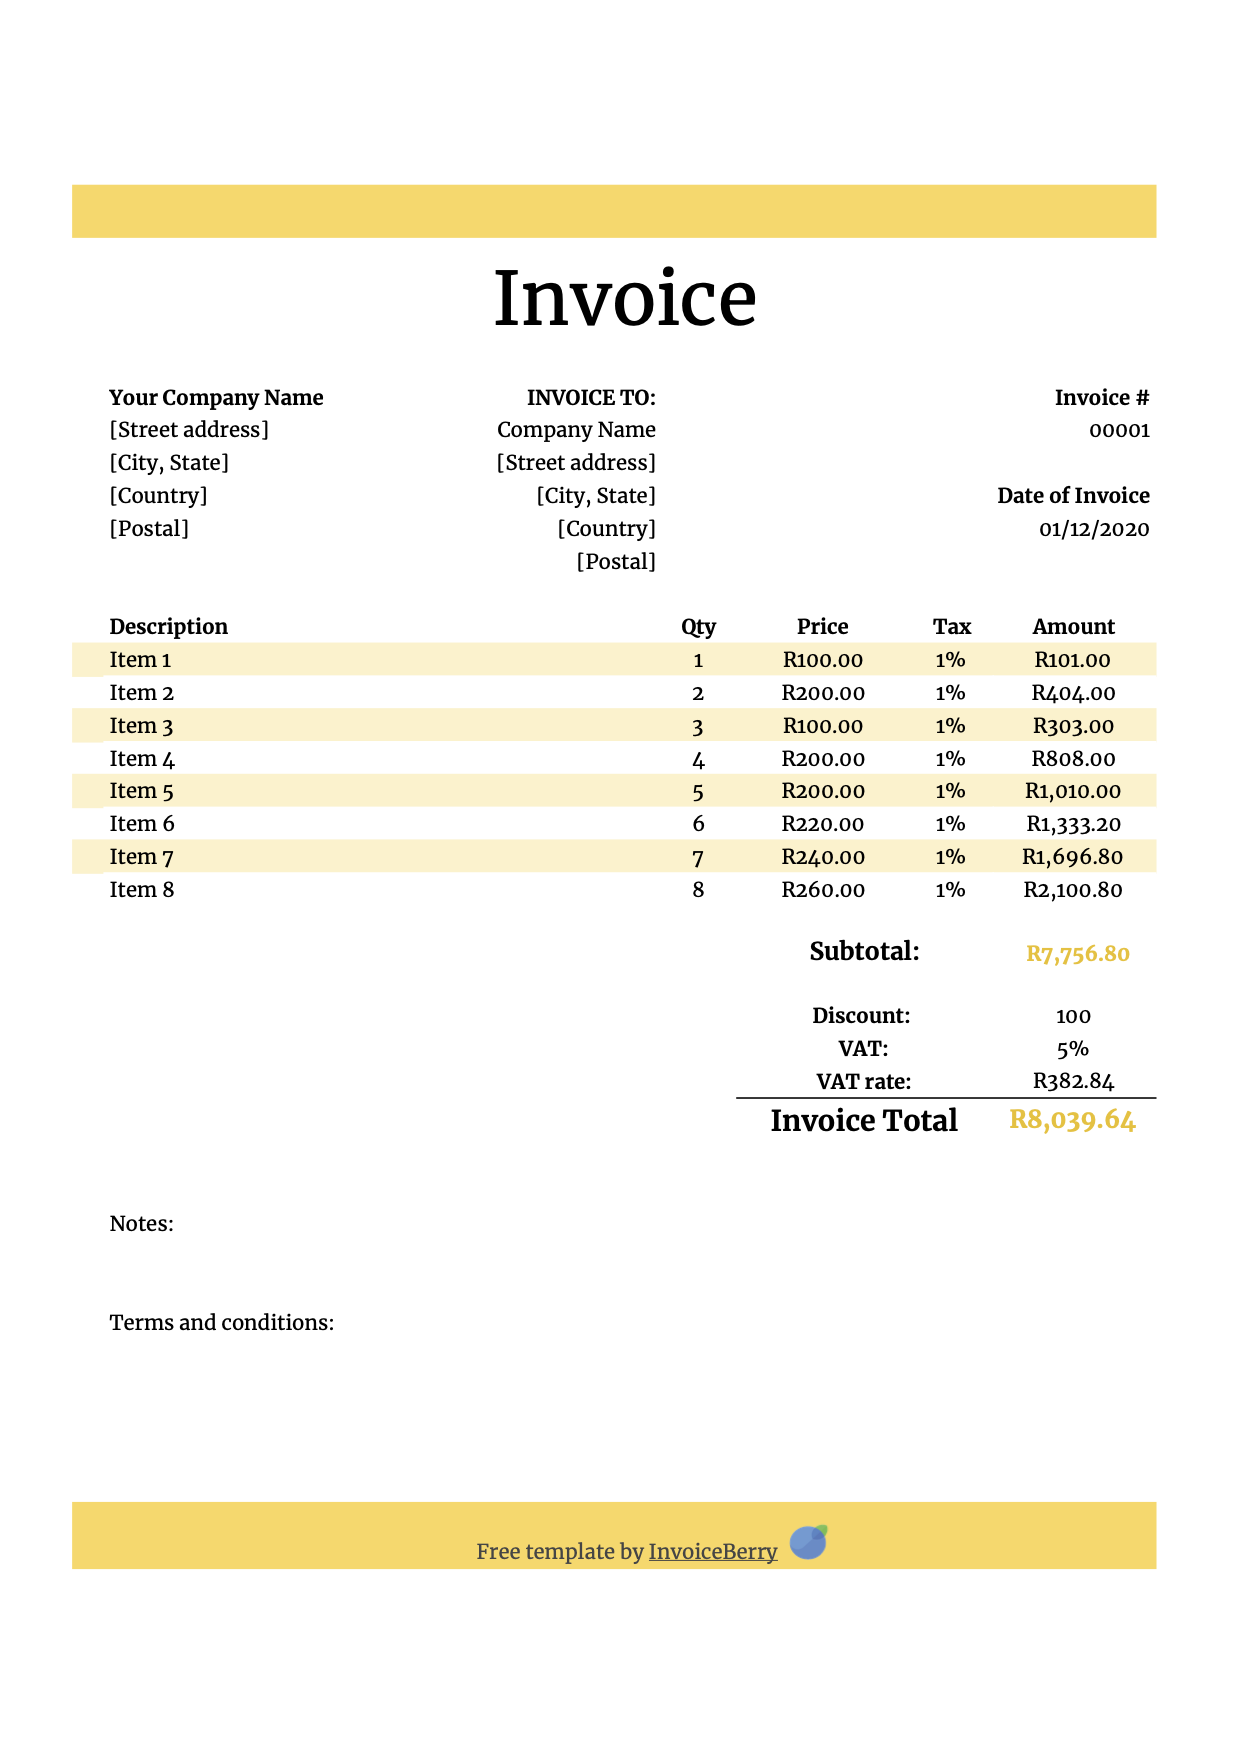 Google Sheet Invoice Template (3)